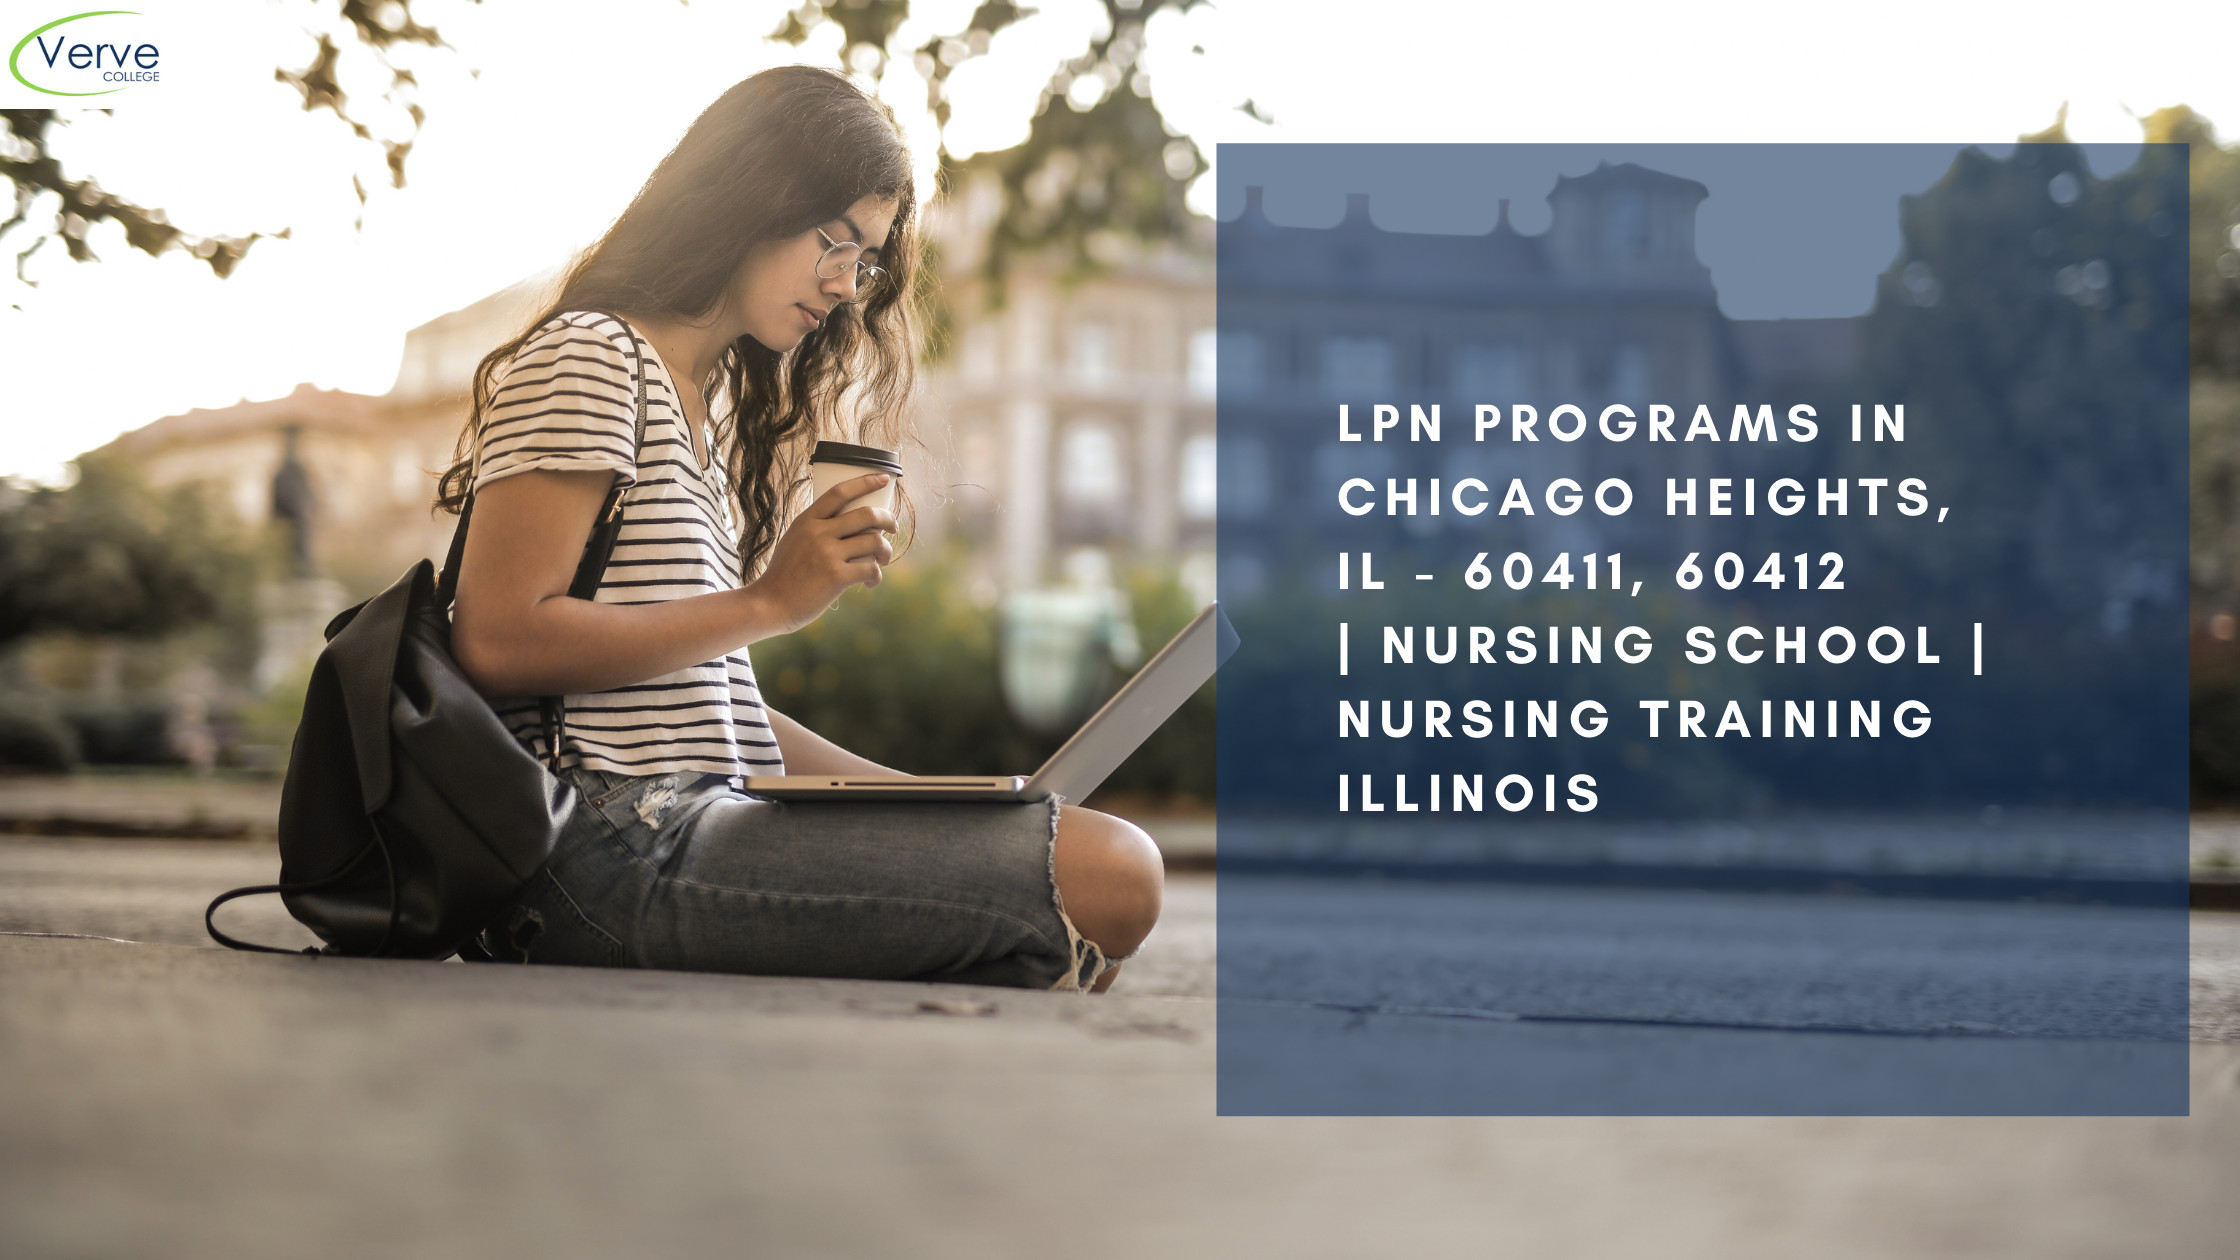 LPN Programs in Chicago Heights, IL – 60411, 60412 | Nursing School | Nursing Training Illinois